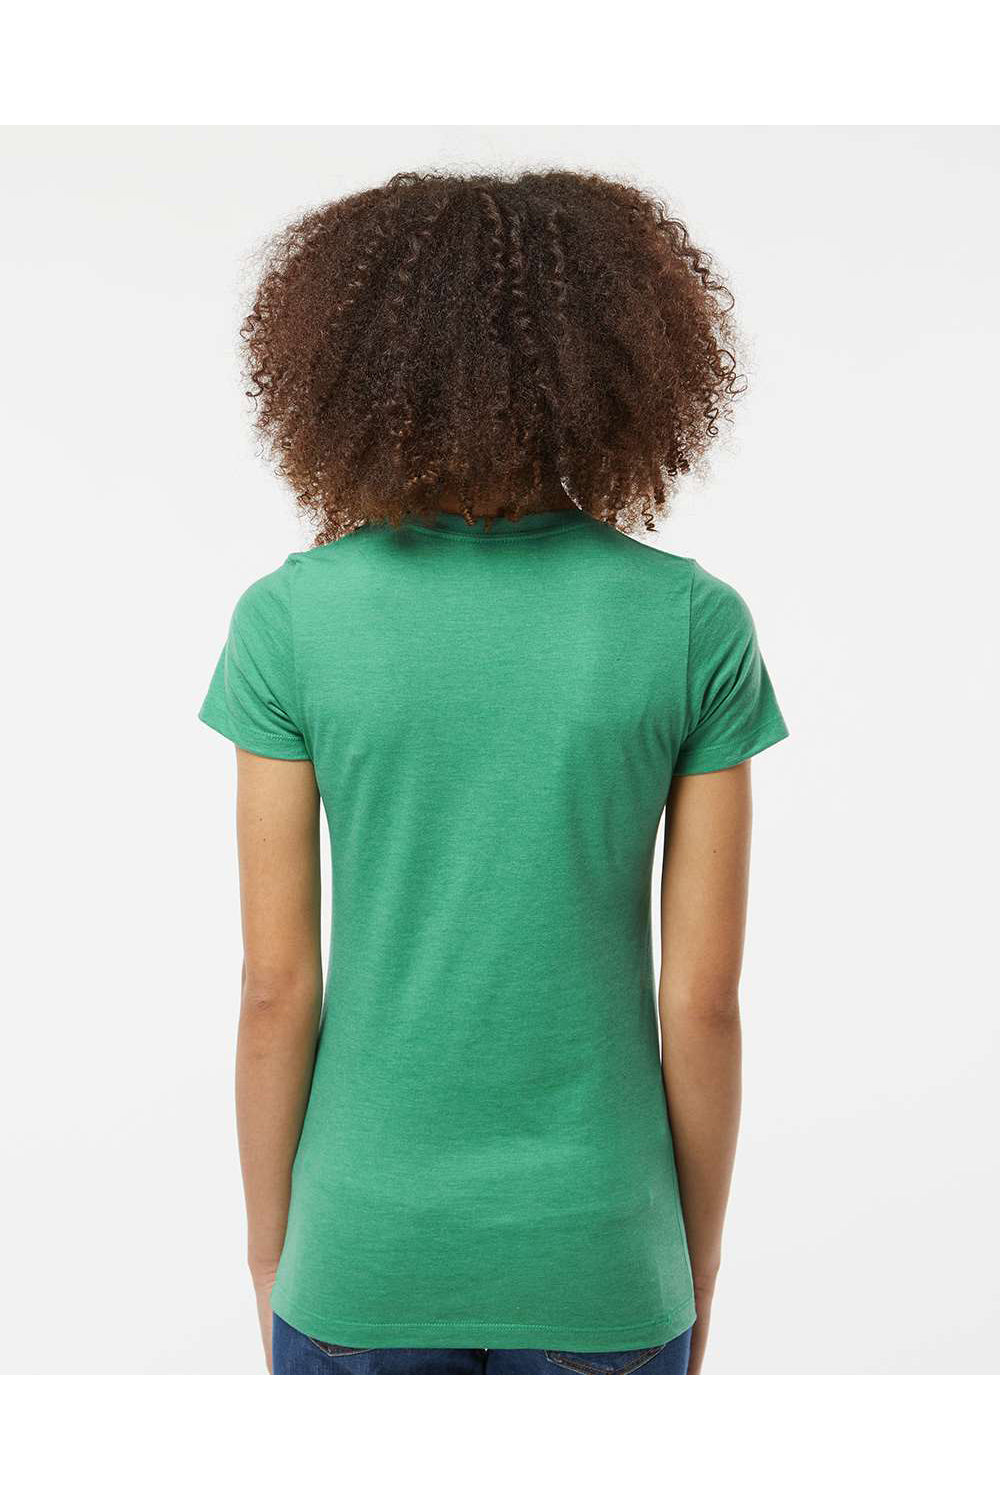 Tultex 542 Womens Premium Short Sleeve Crewneck T-Shirt Heather Kelly Green Model Back